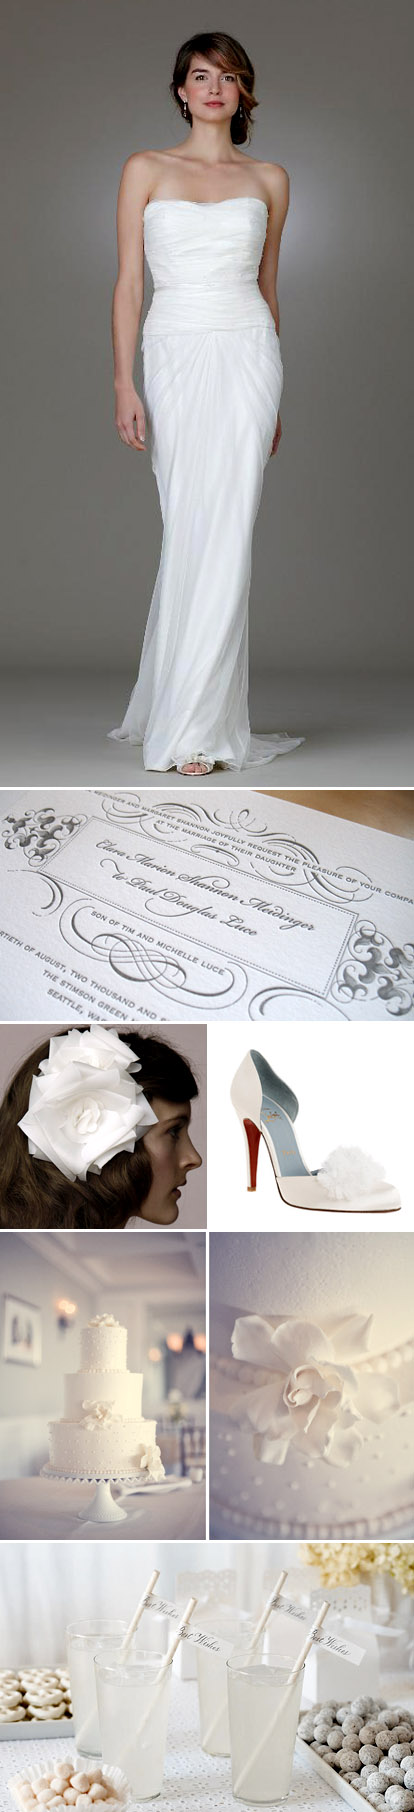 Amy Kuschel's 2010 wedding dress collection, Kai wedding gown, romantic white on white wedding color palette